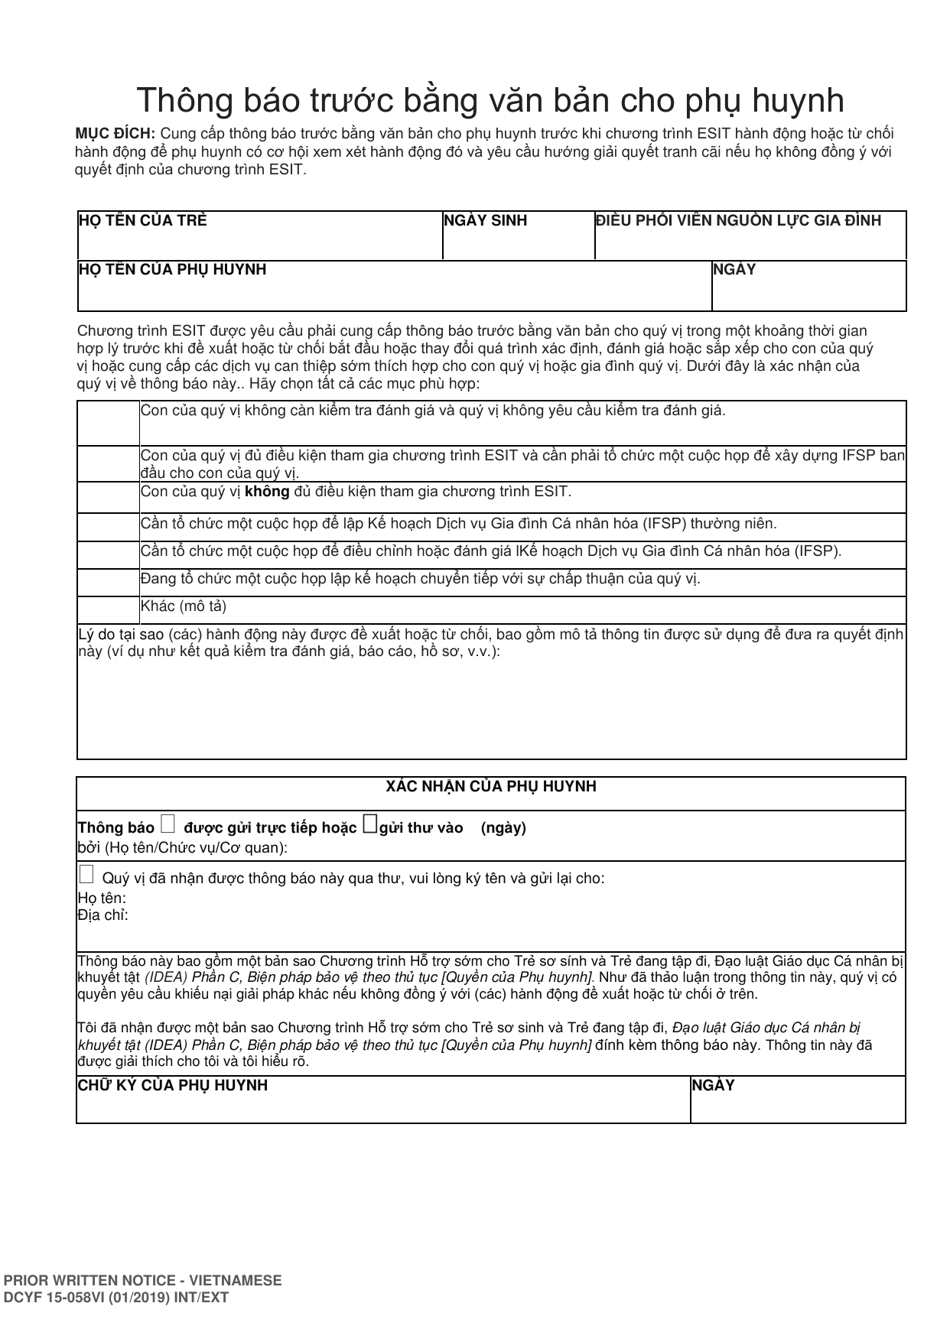 DCYF Form 15-058 Parent Prior Written Notice - Washington (Vietnamese), Page 1